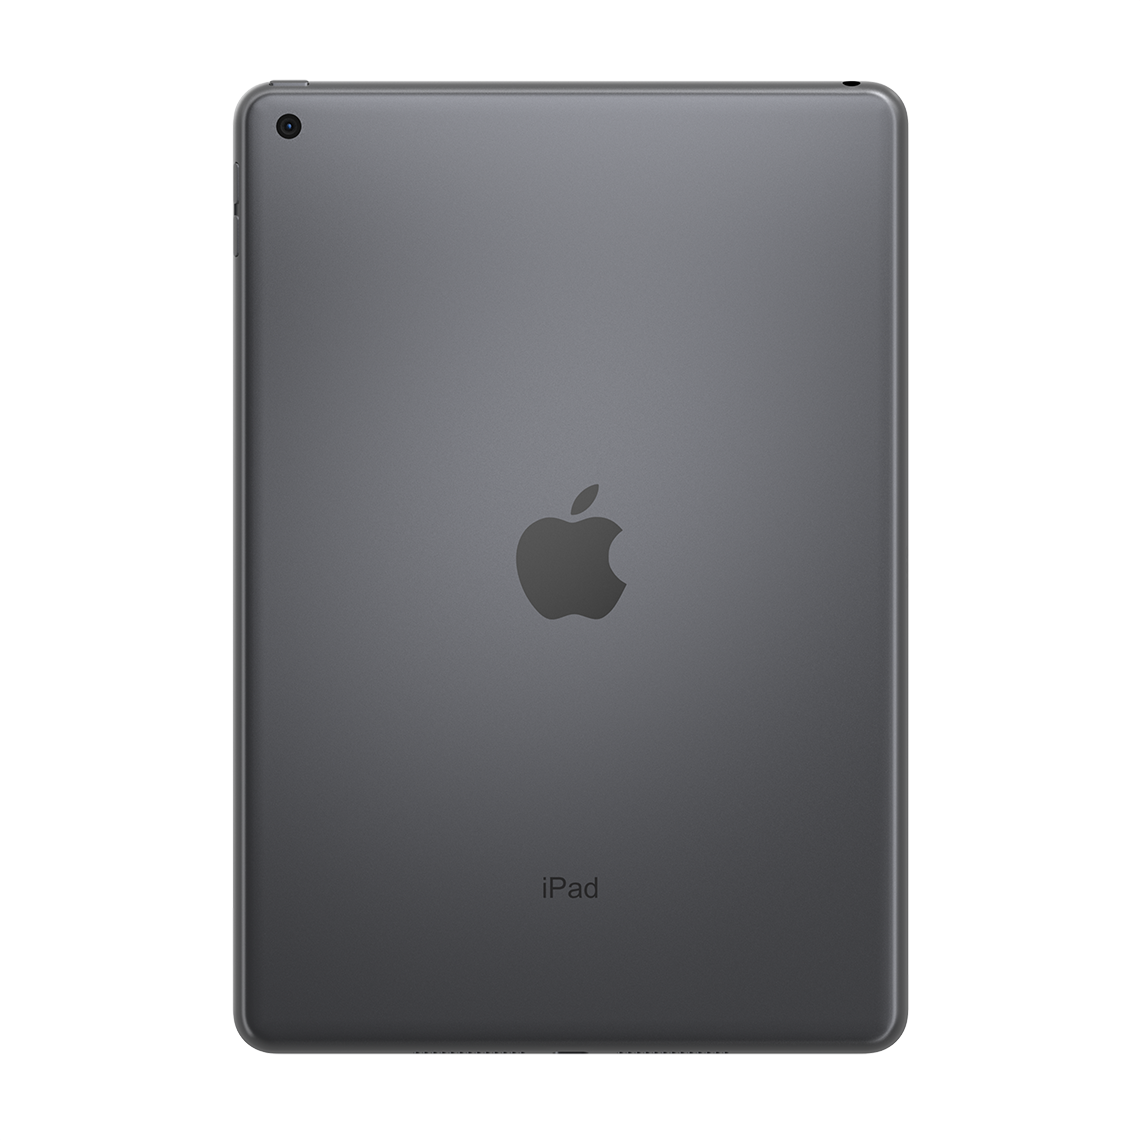 Apple iPad 10.2-inch 9th Generation - Space Gray - 64GB, Wi-Fi, Open Box